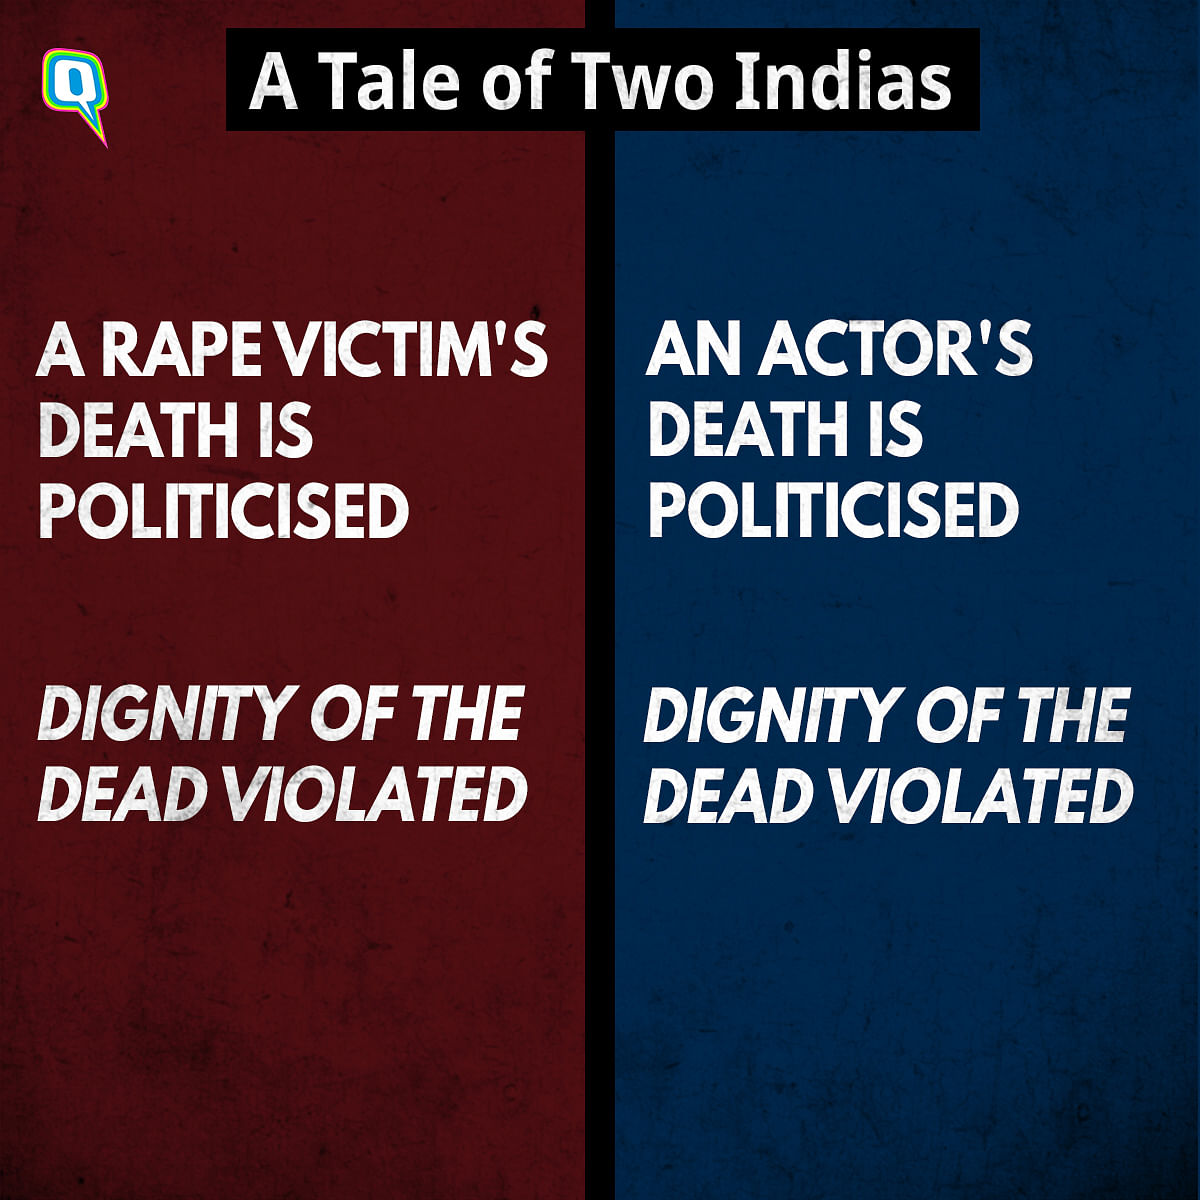 Different tragedies, different Indias.